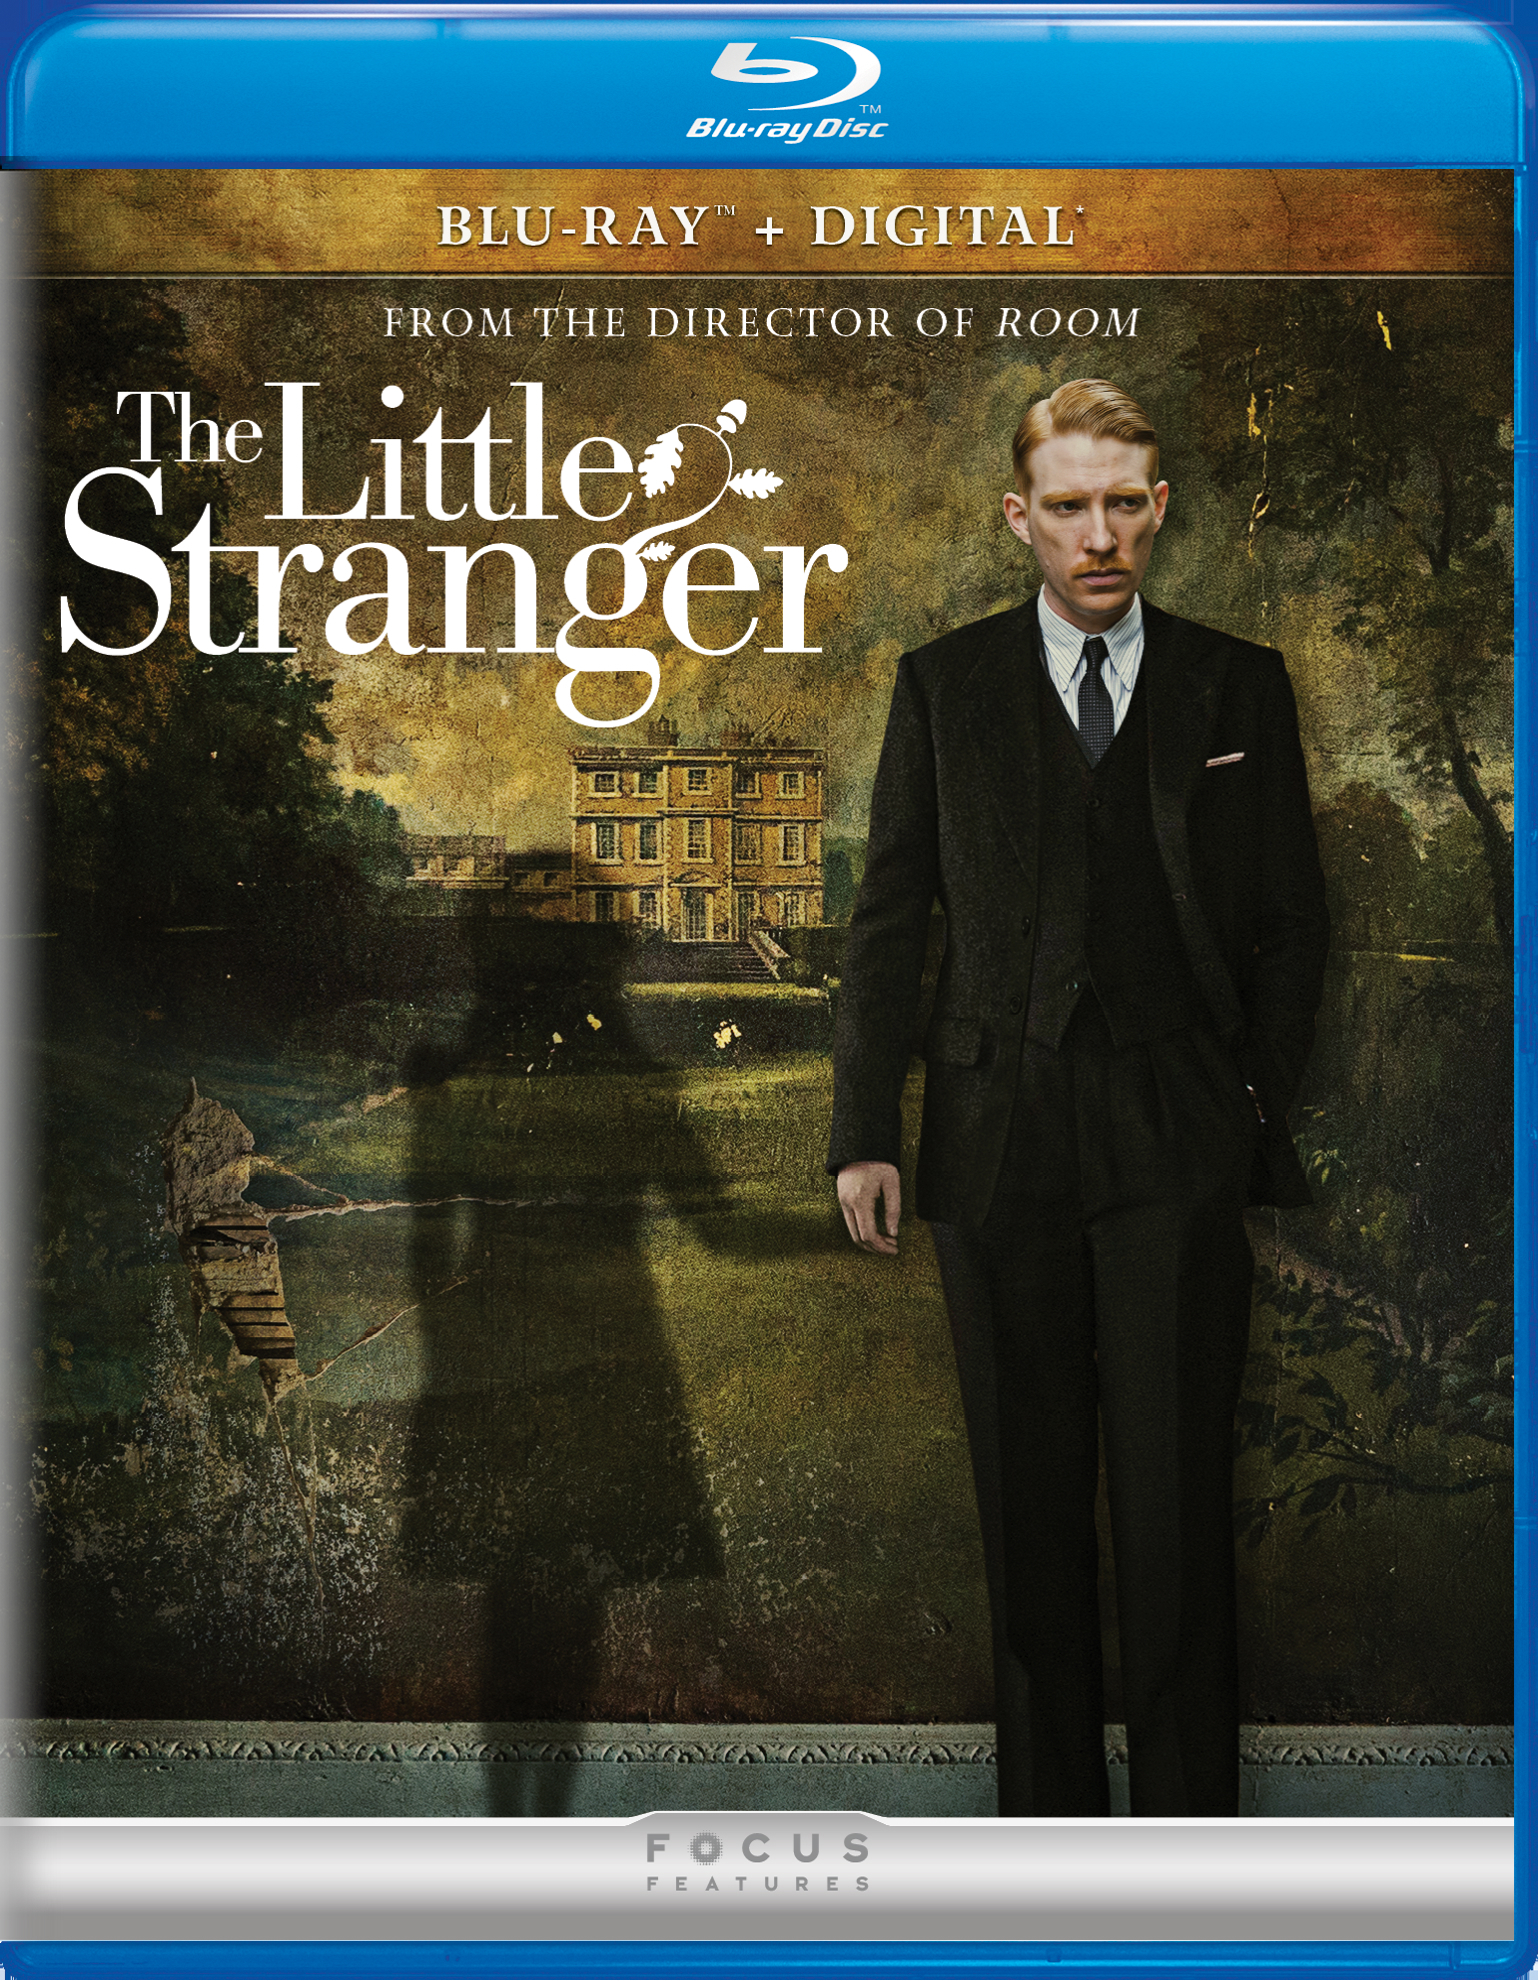 The Little Stranger (Blu-ray + Digital HD) - Blu-ray [ 2018 ]  - Drama Movies On Blu-ray - Movies On GRUV